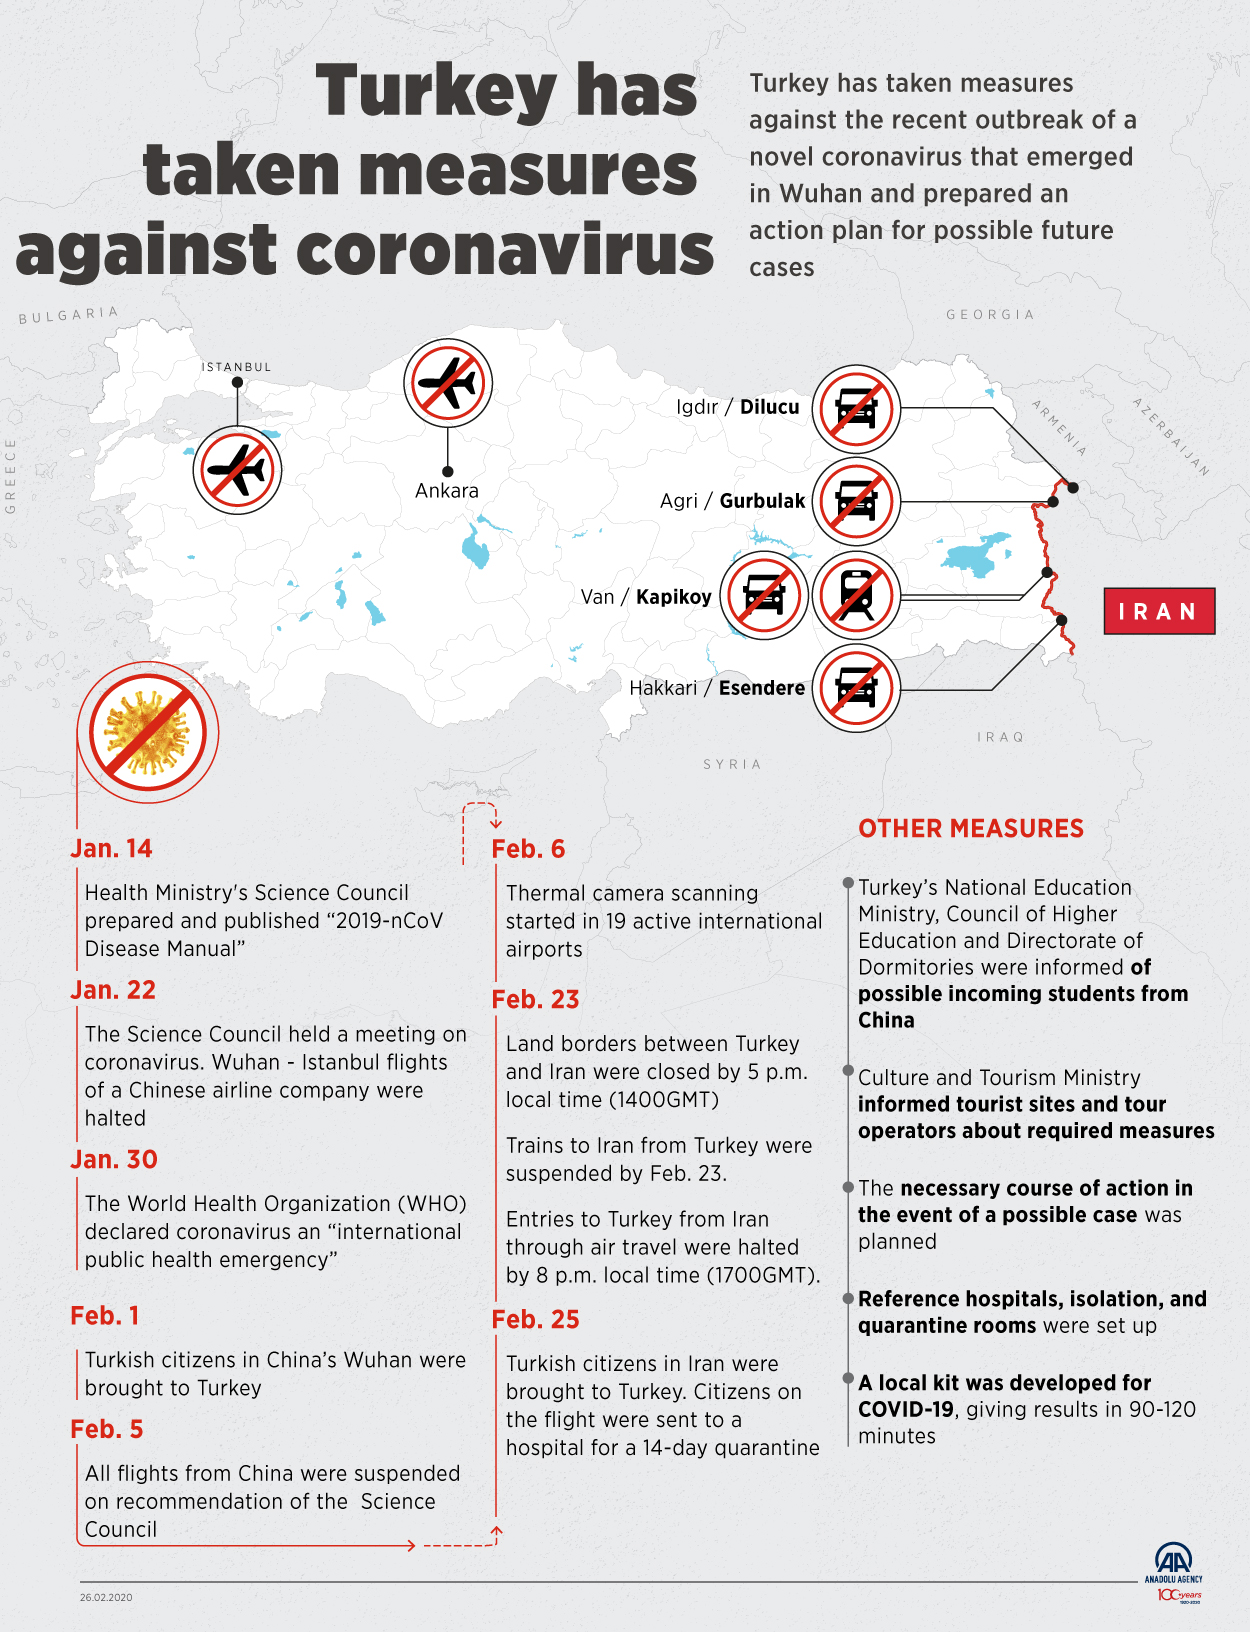 Turkey has  taken measures  against coronavirus